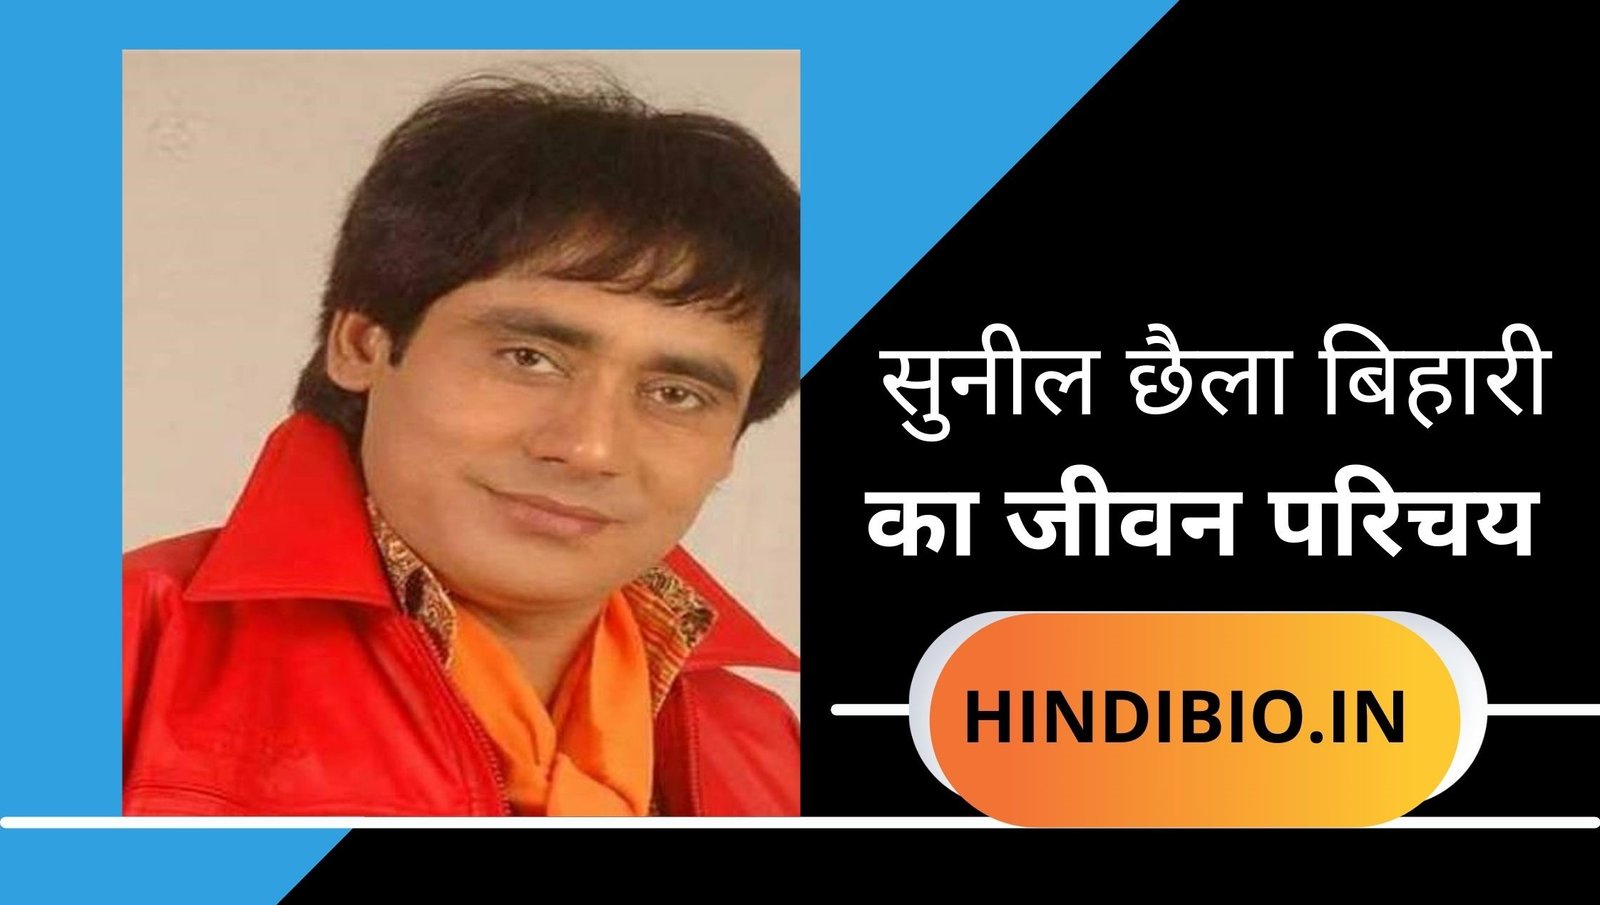 Biography of Sunil Chhaila Bihari in Hindi Jivani